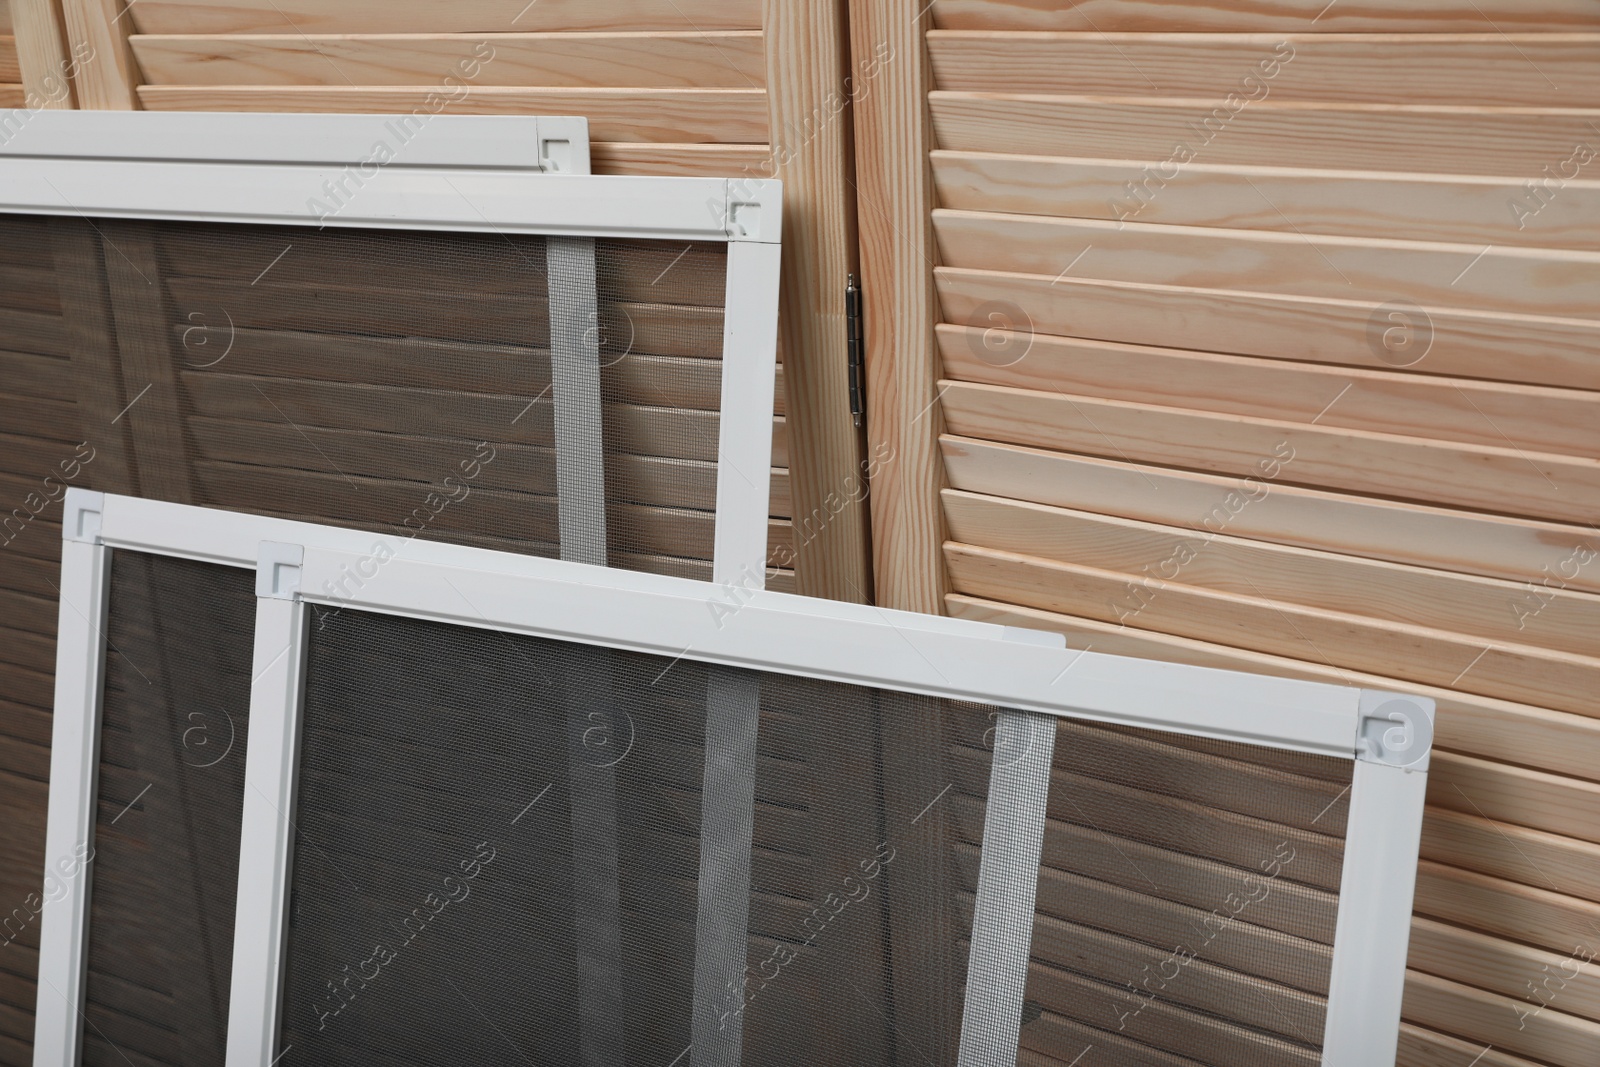 Photo of Set of window screens near wooden folding screen